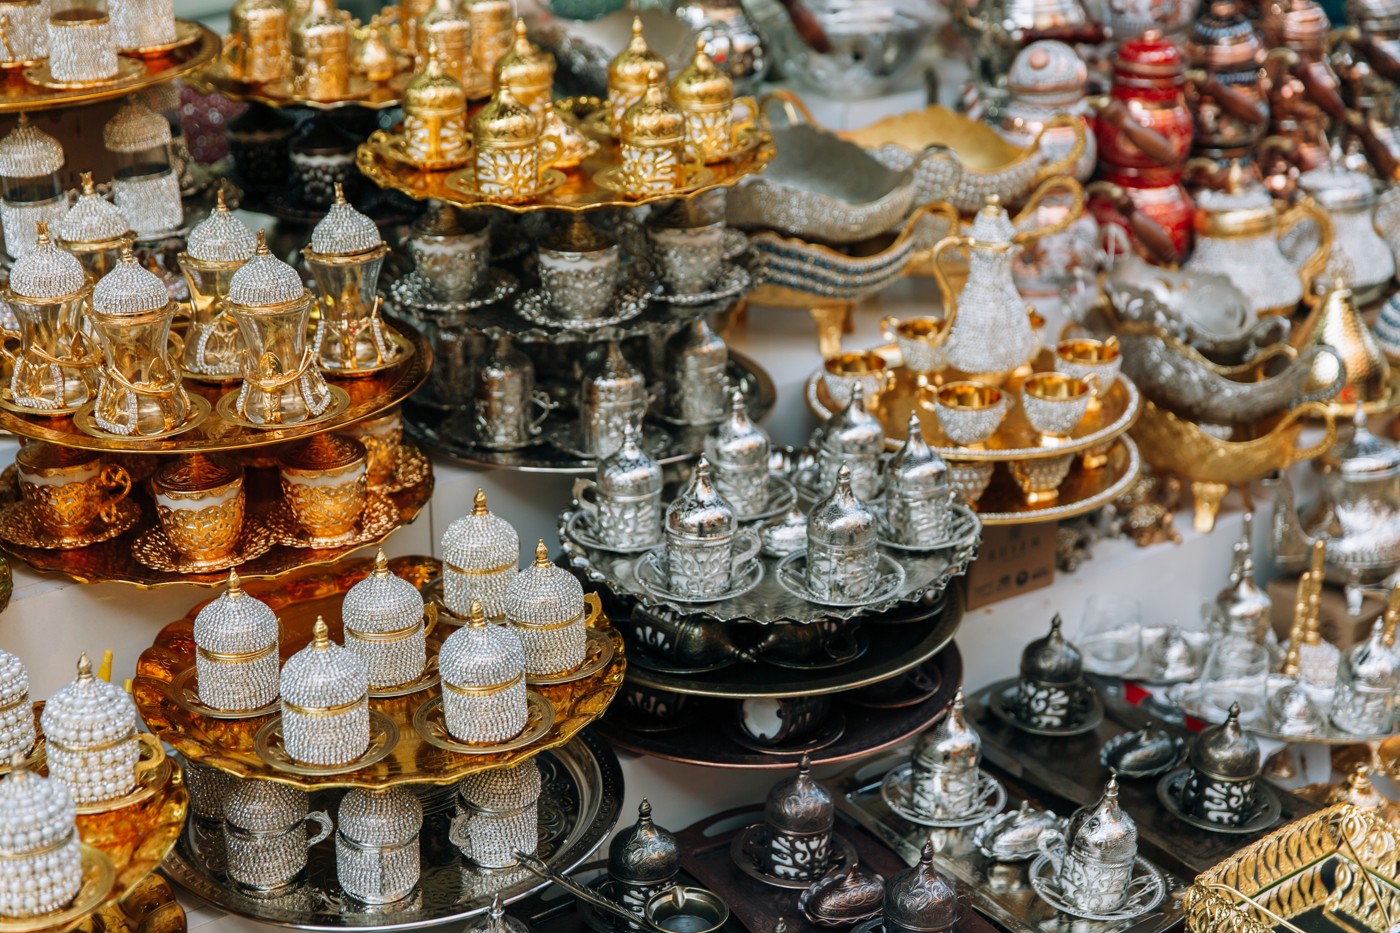 Egyptian Bazaar in Turkey